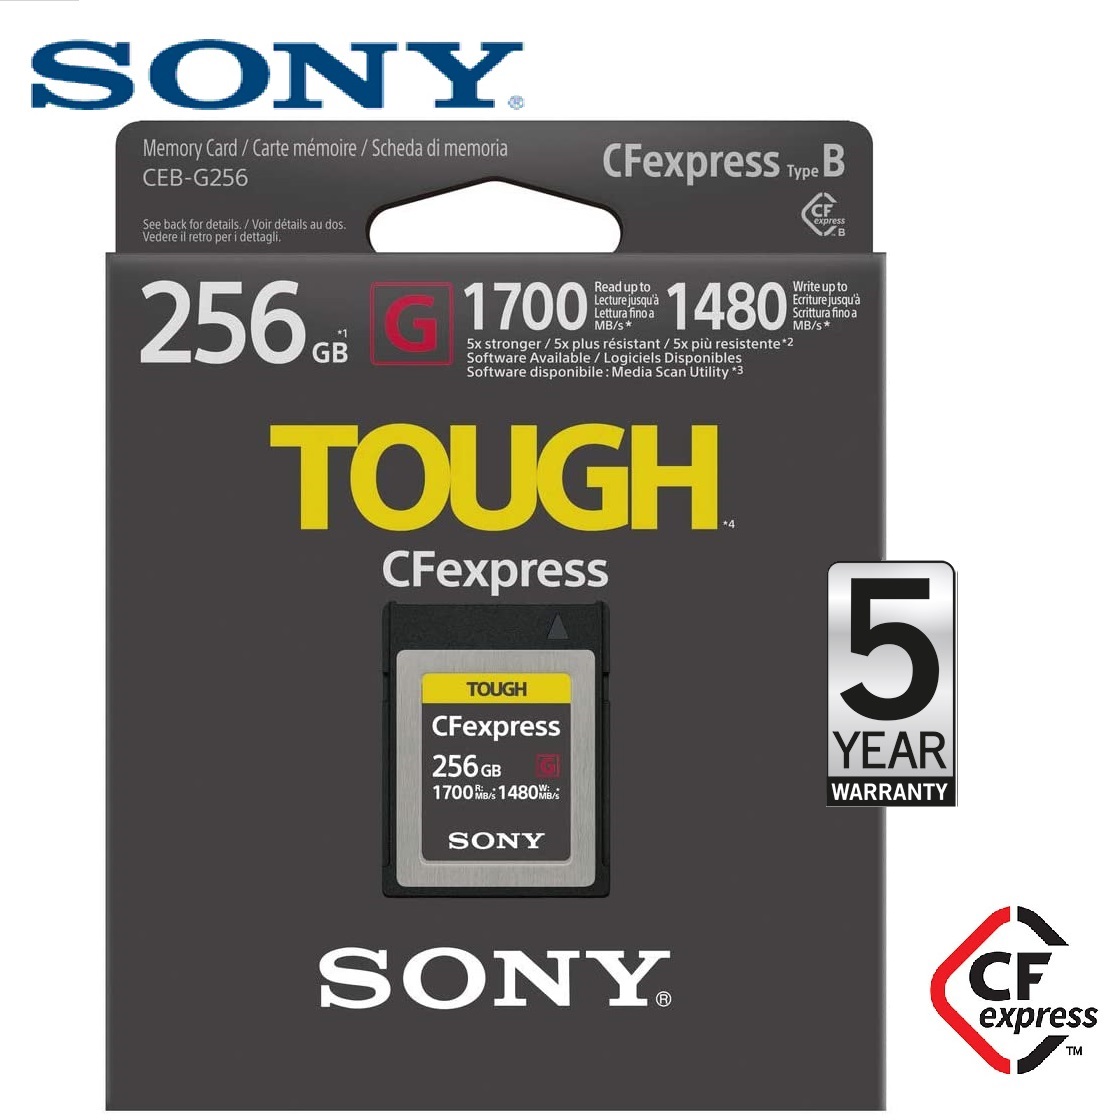 Sony 256GB CF Express Type B TOUGH